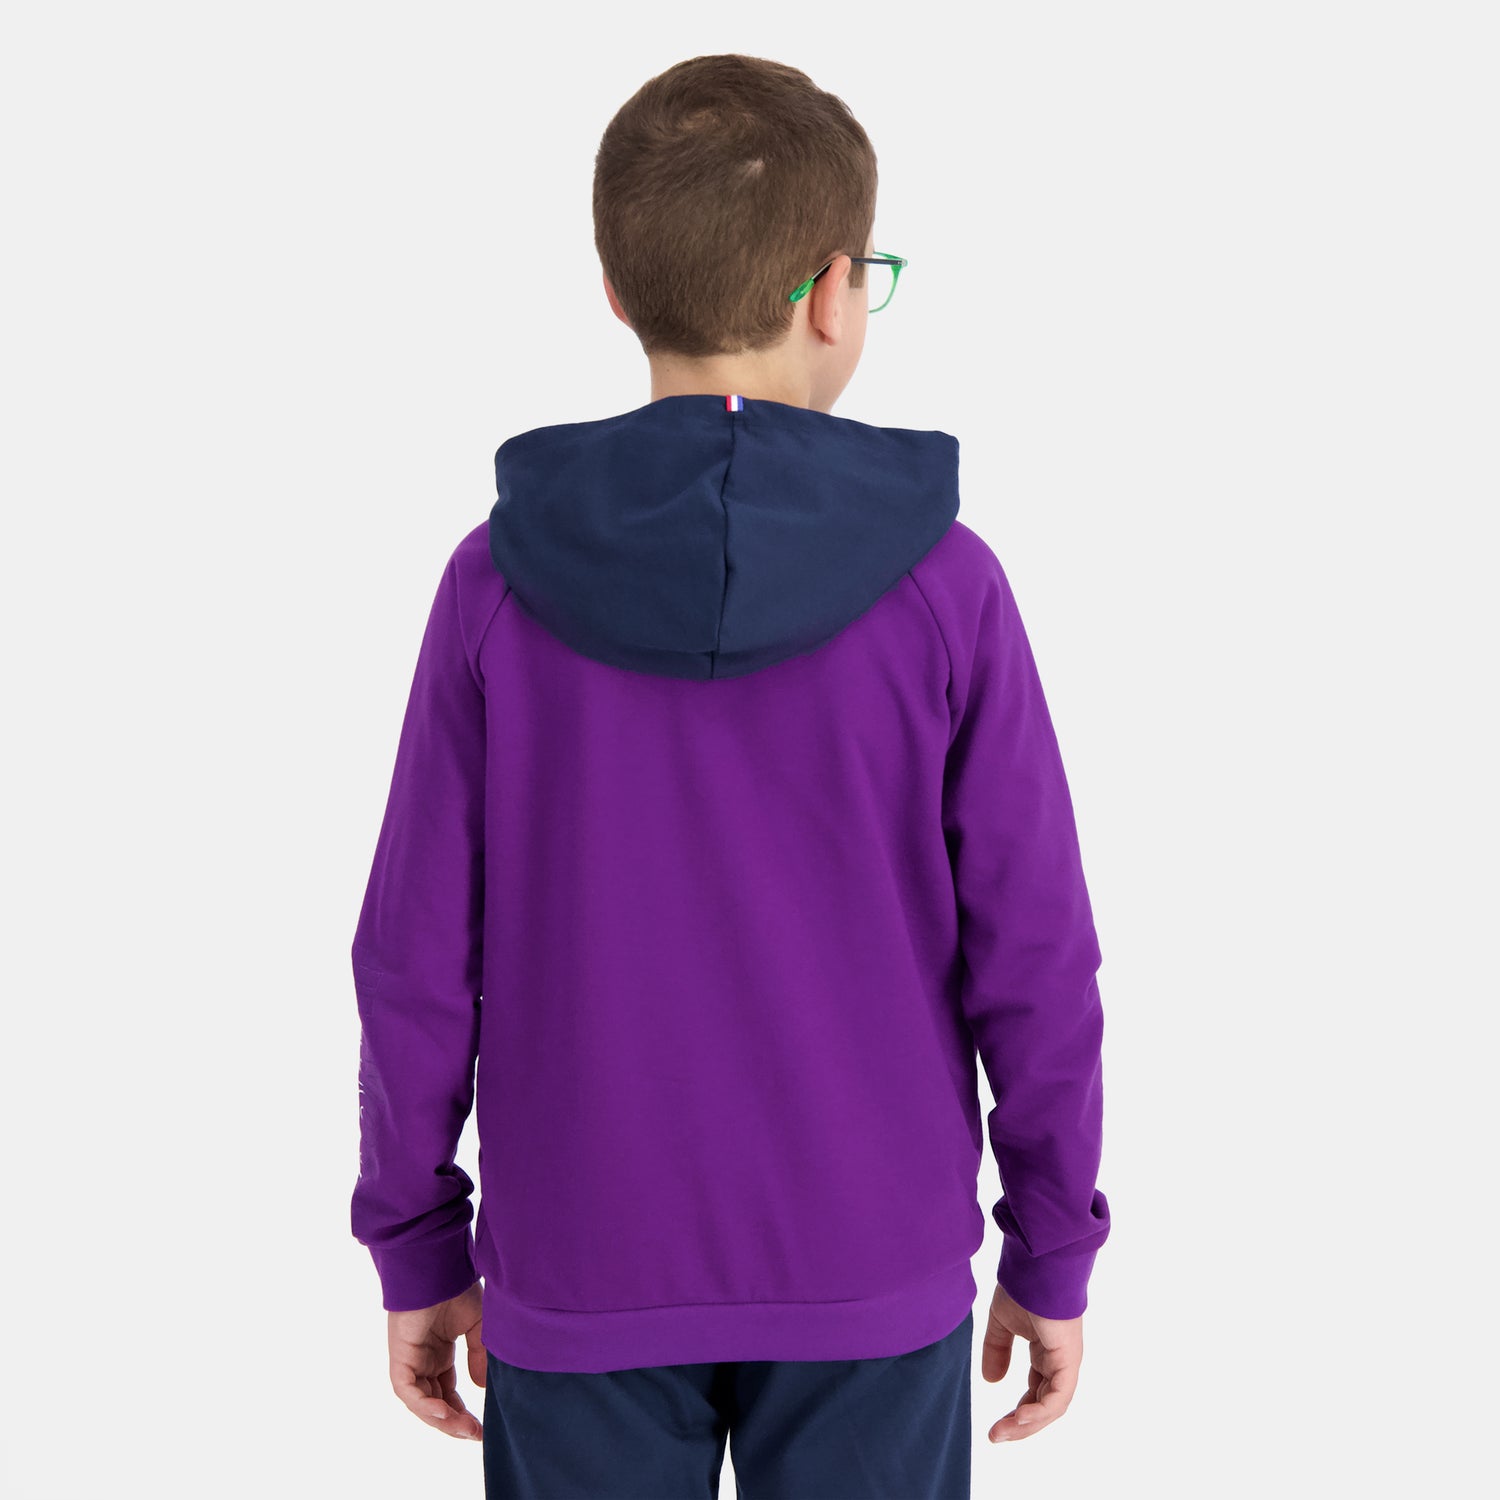 2410685-SAISON 2 Hoody N°1 Enfant violet j/dress  | Felpa Con Cappuccio Bambino